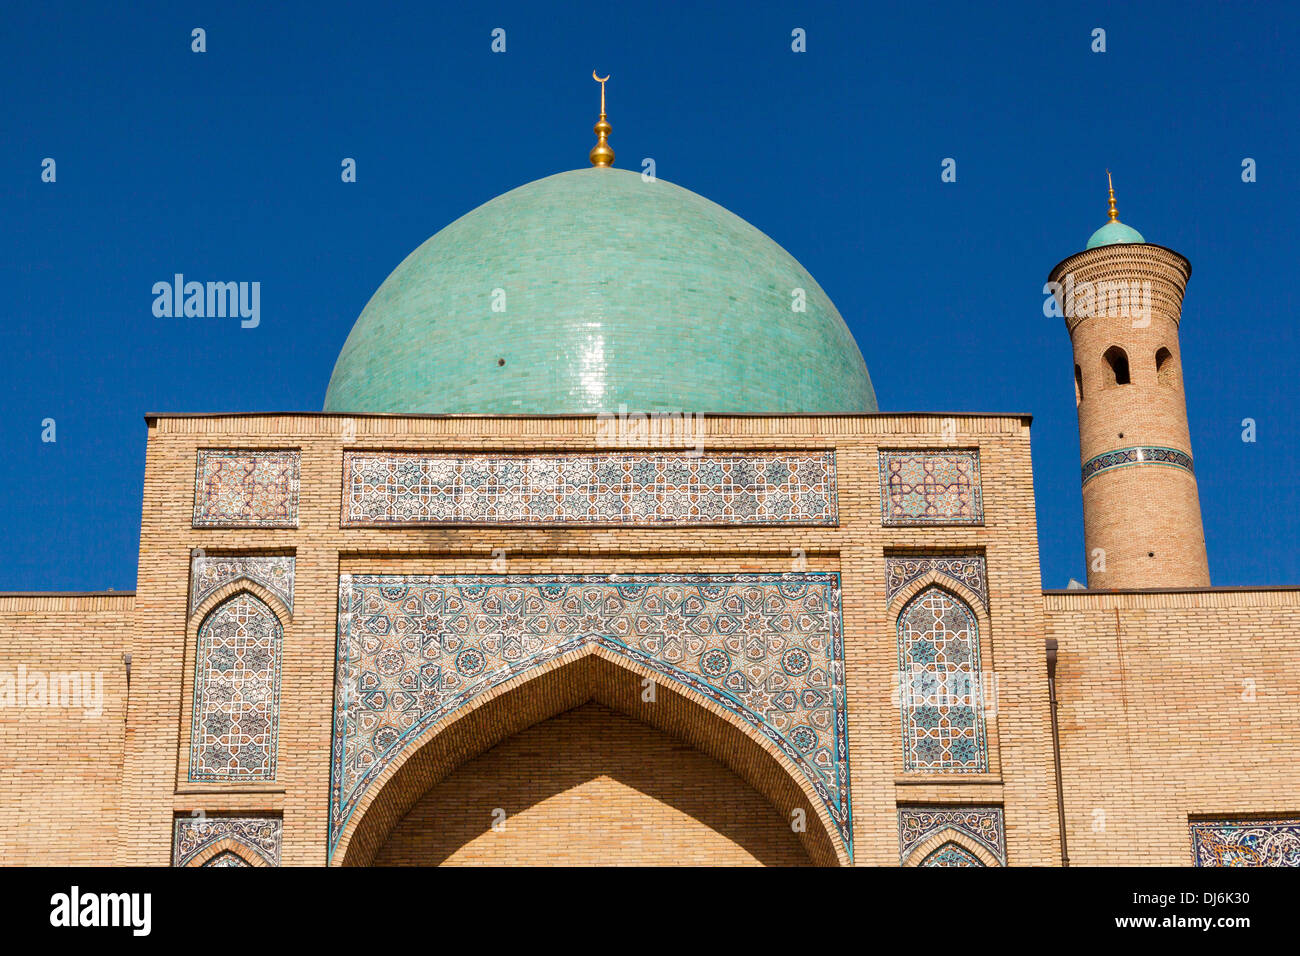 A dome and minaret, Hazrati Imom Mosque, Hazrati Imom Complex, Hazrati Imom Square, Tashkent, Uzbekistan Stock Photo